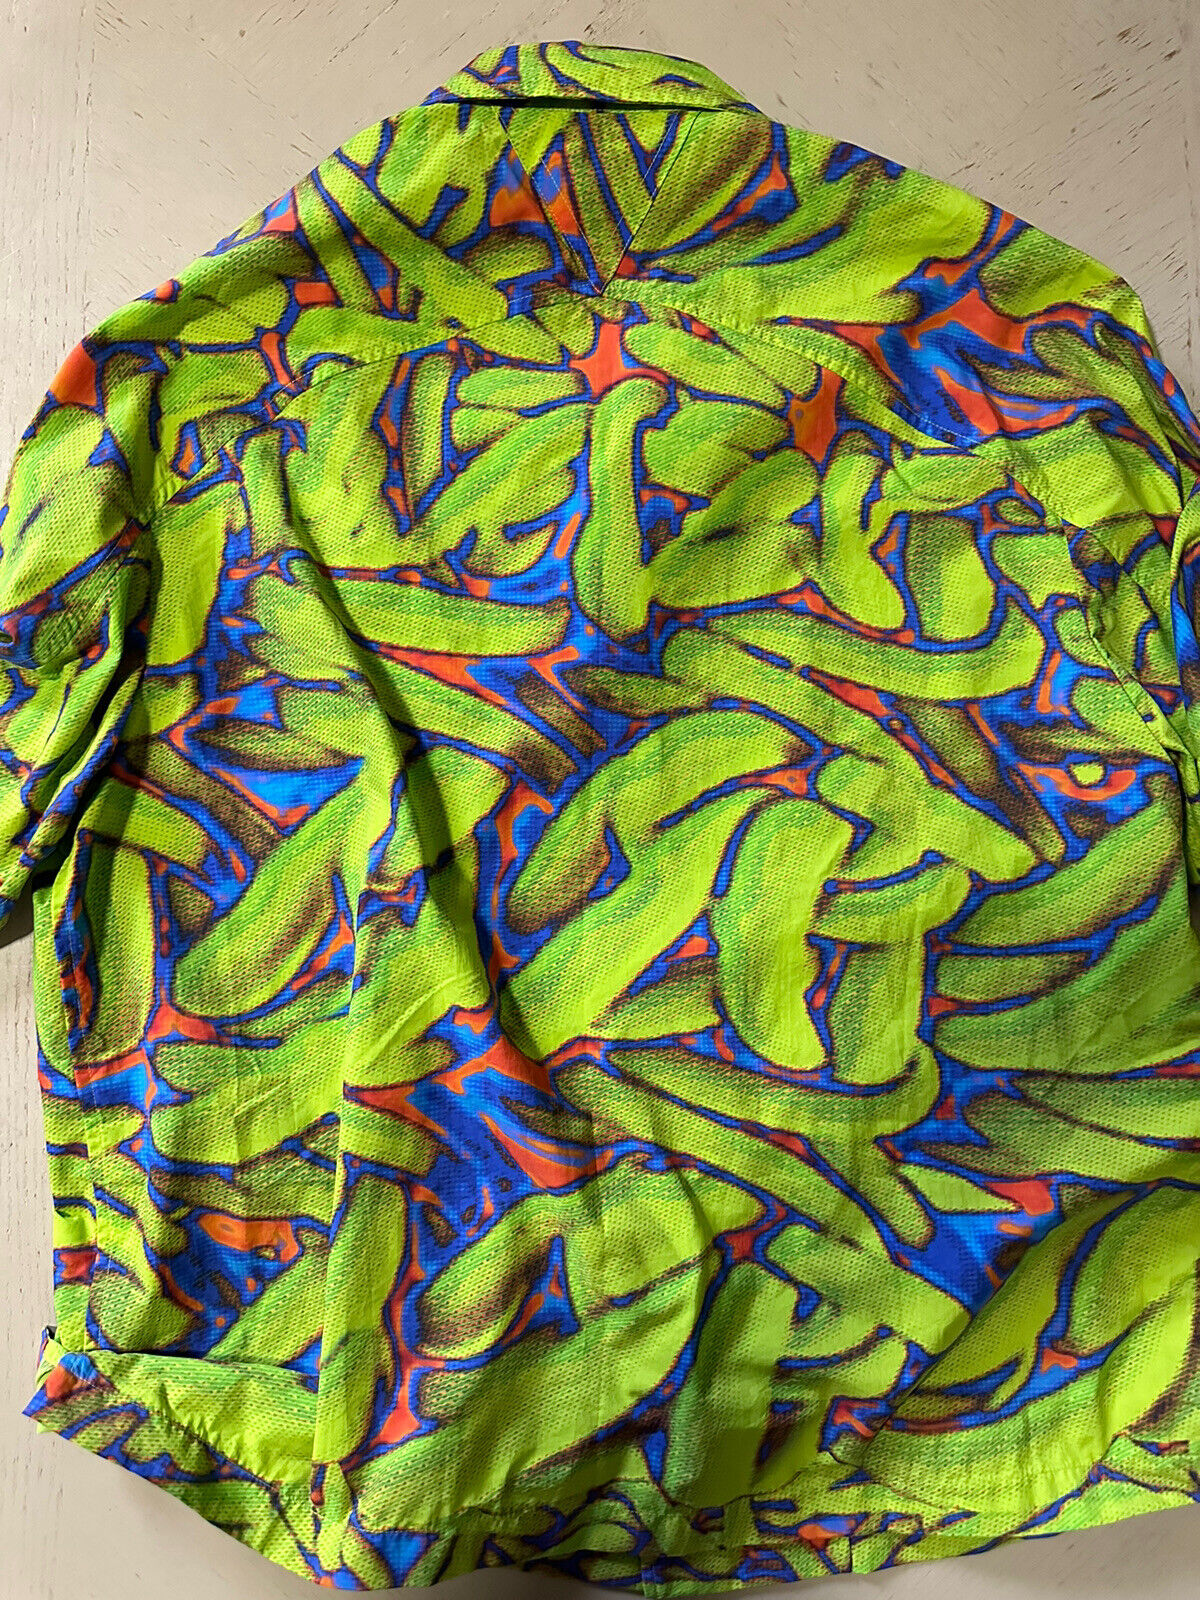 NWT $1050 Bottega Veneta Men’s Oversized Bandana Print Camp Shirt GREEN L/52 Eu